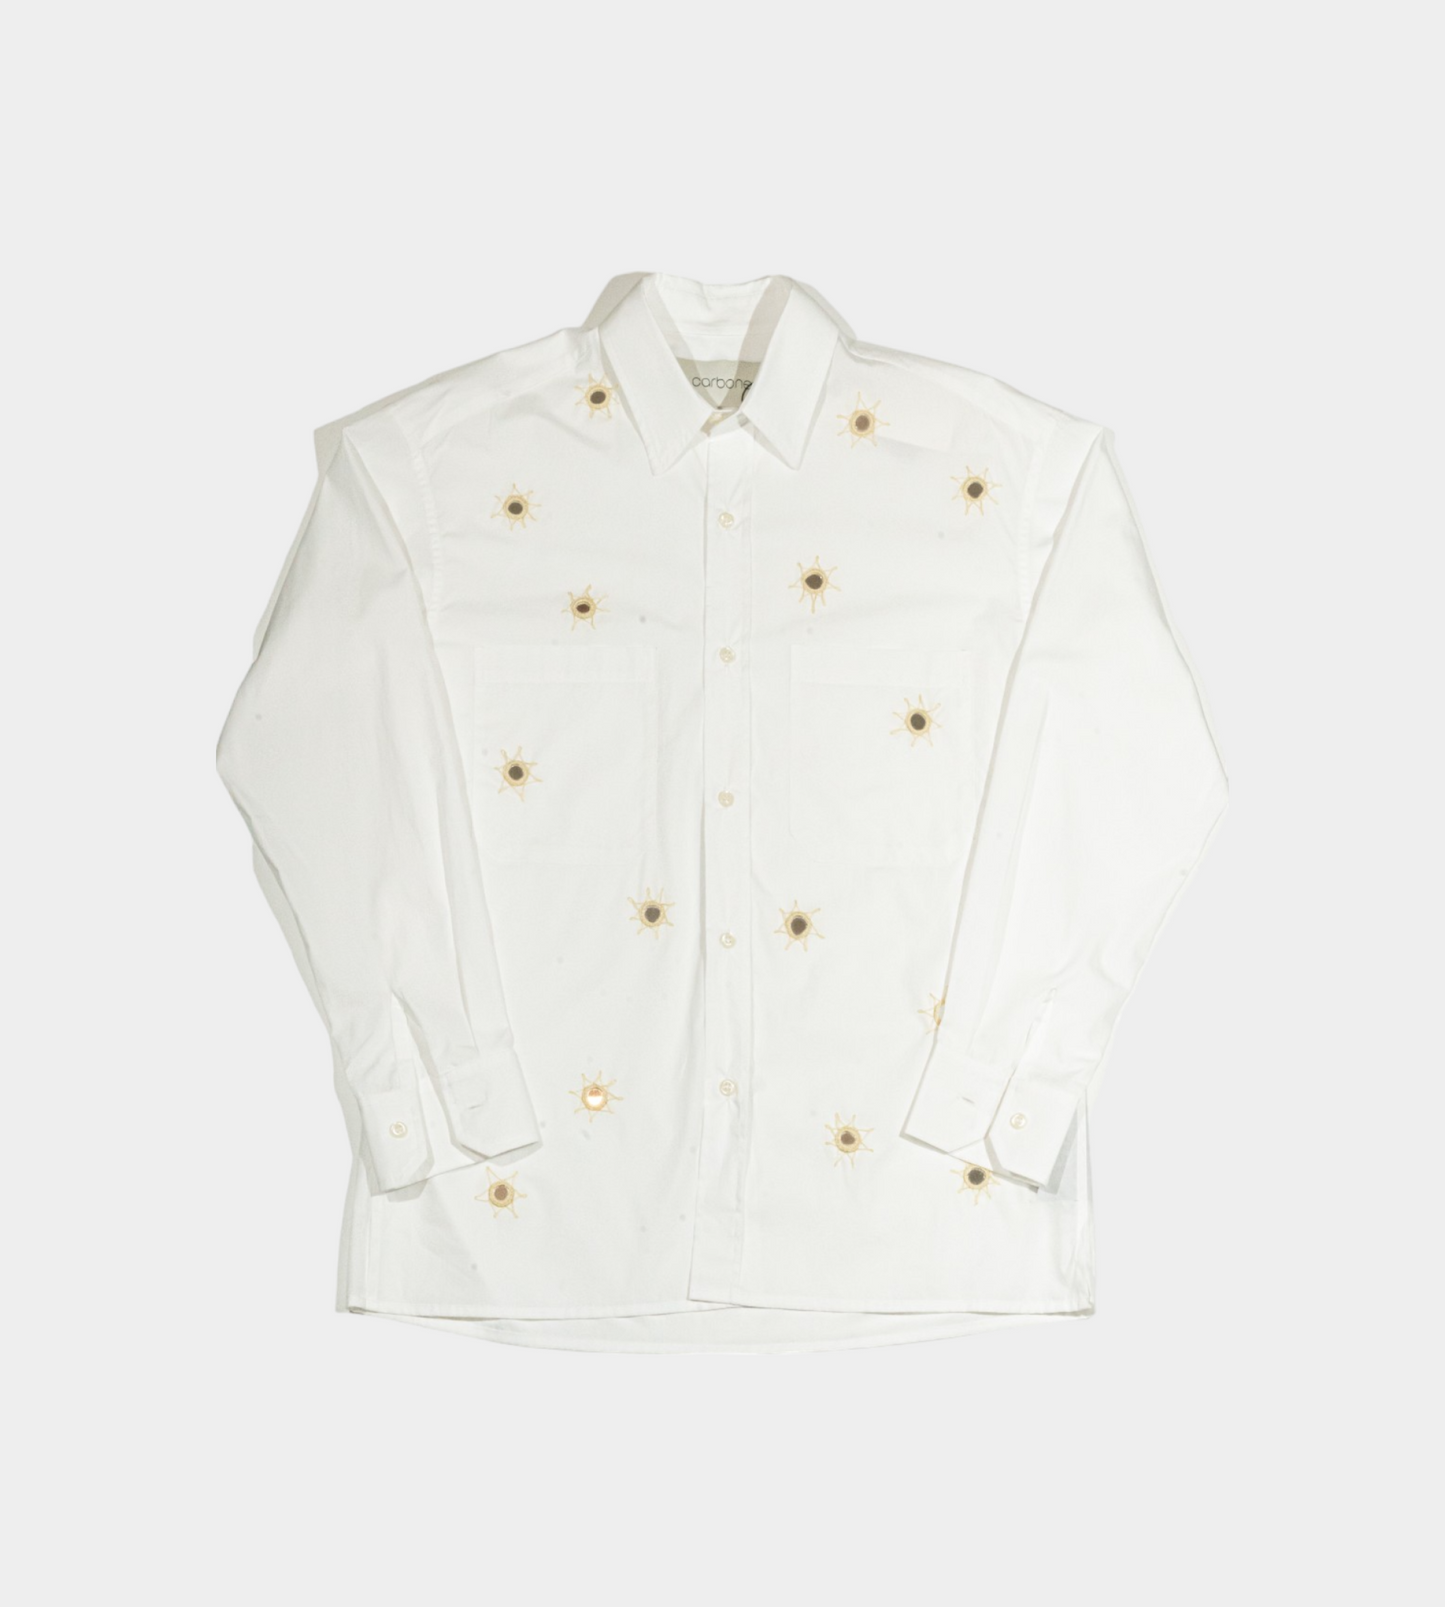 Carbone - Espejos Embroidered Front Shirt